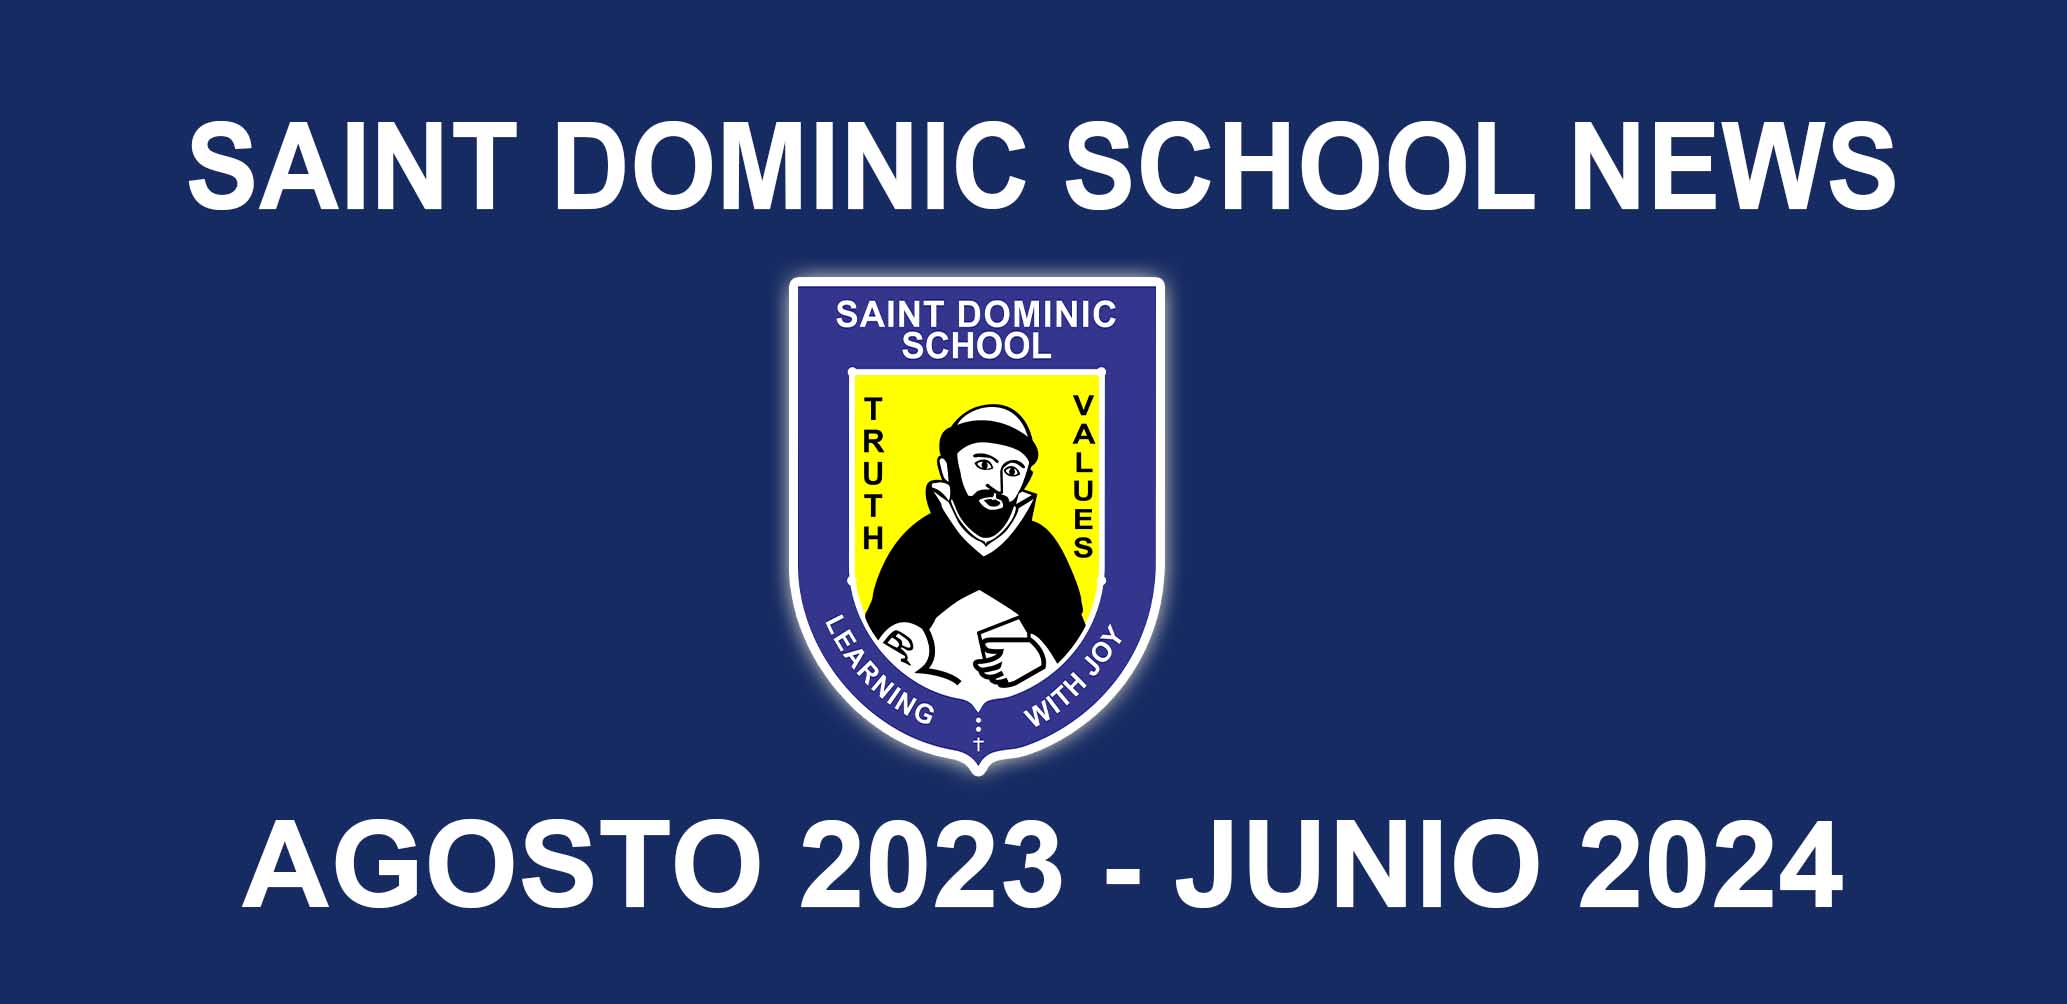 SAINT DOMINIC SCHOOL NEWS 3